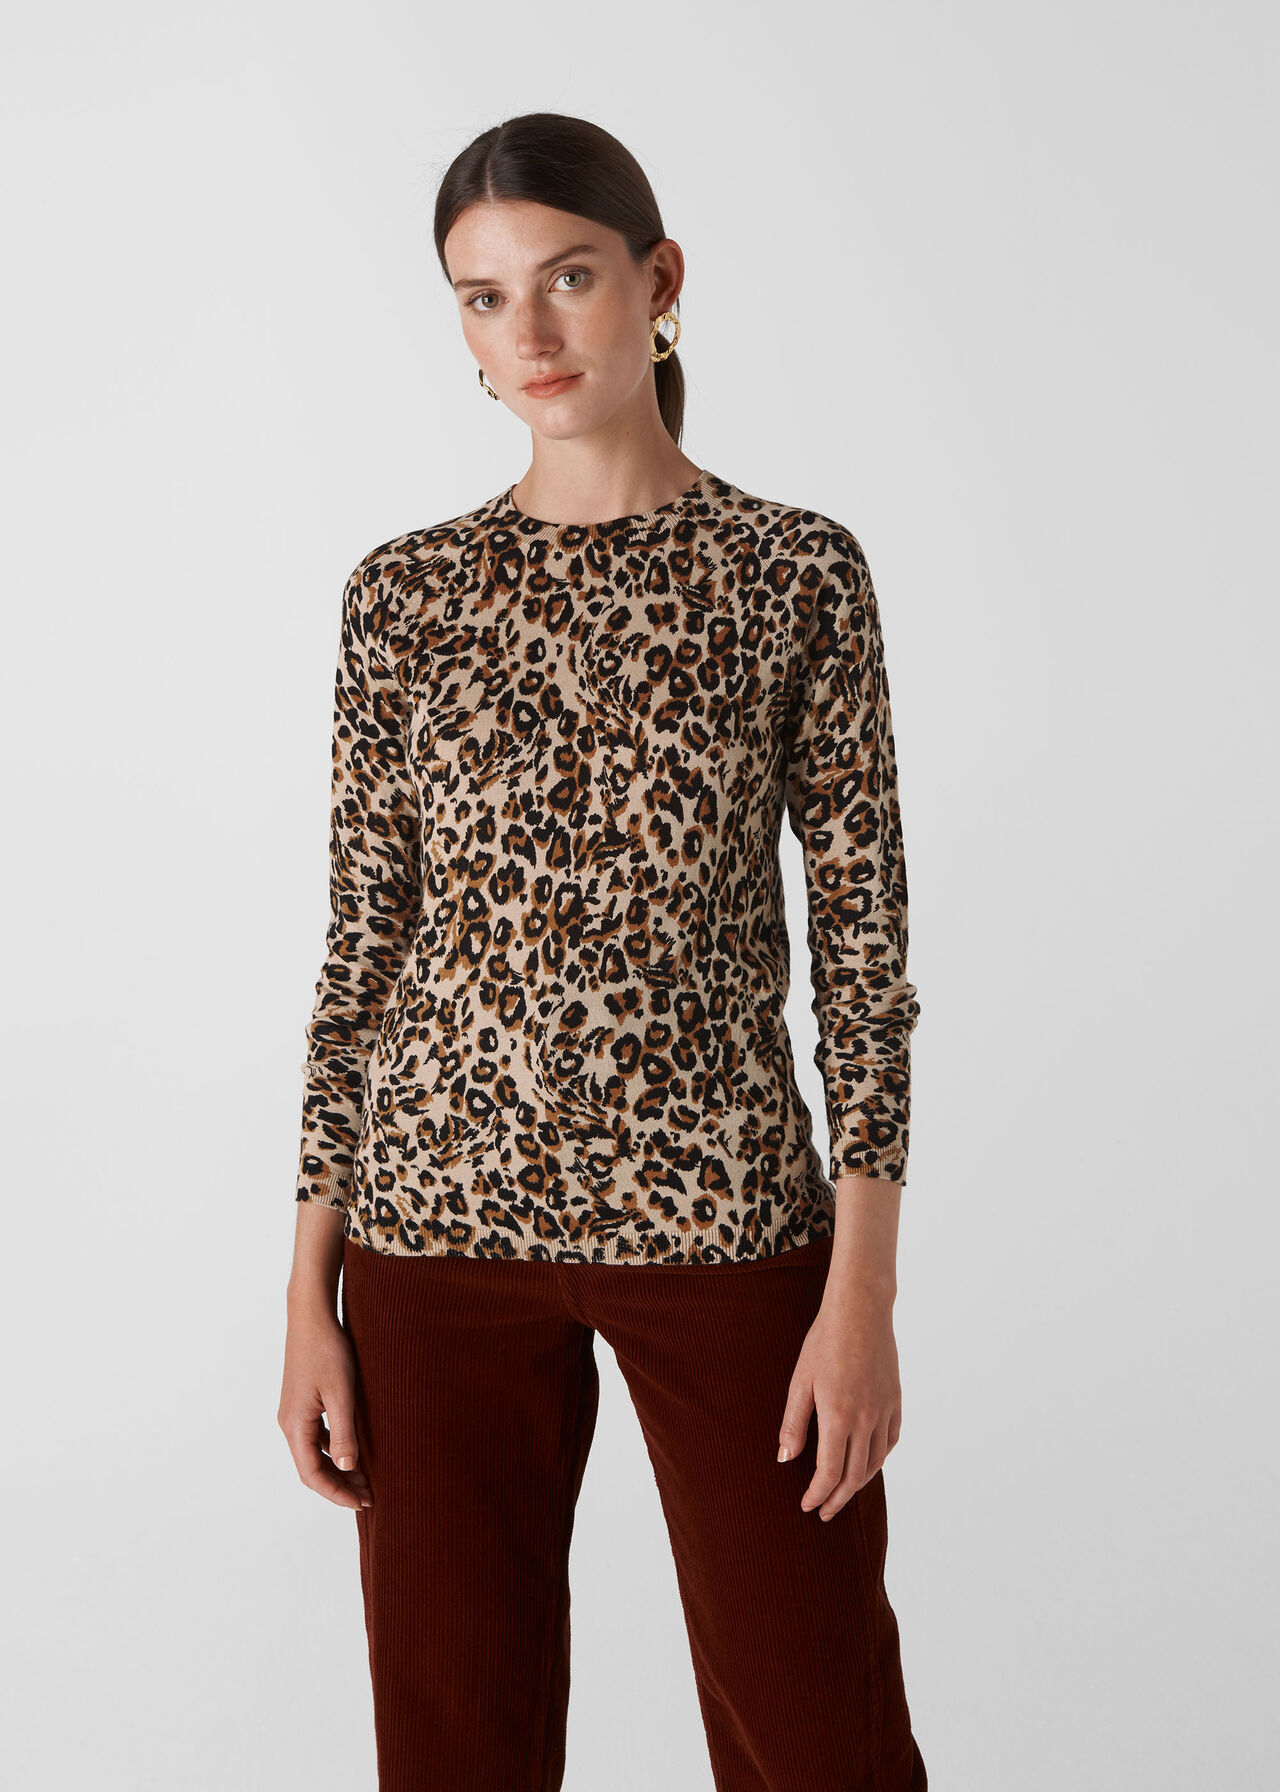 Leopard Print Crew Neck Knit